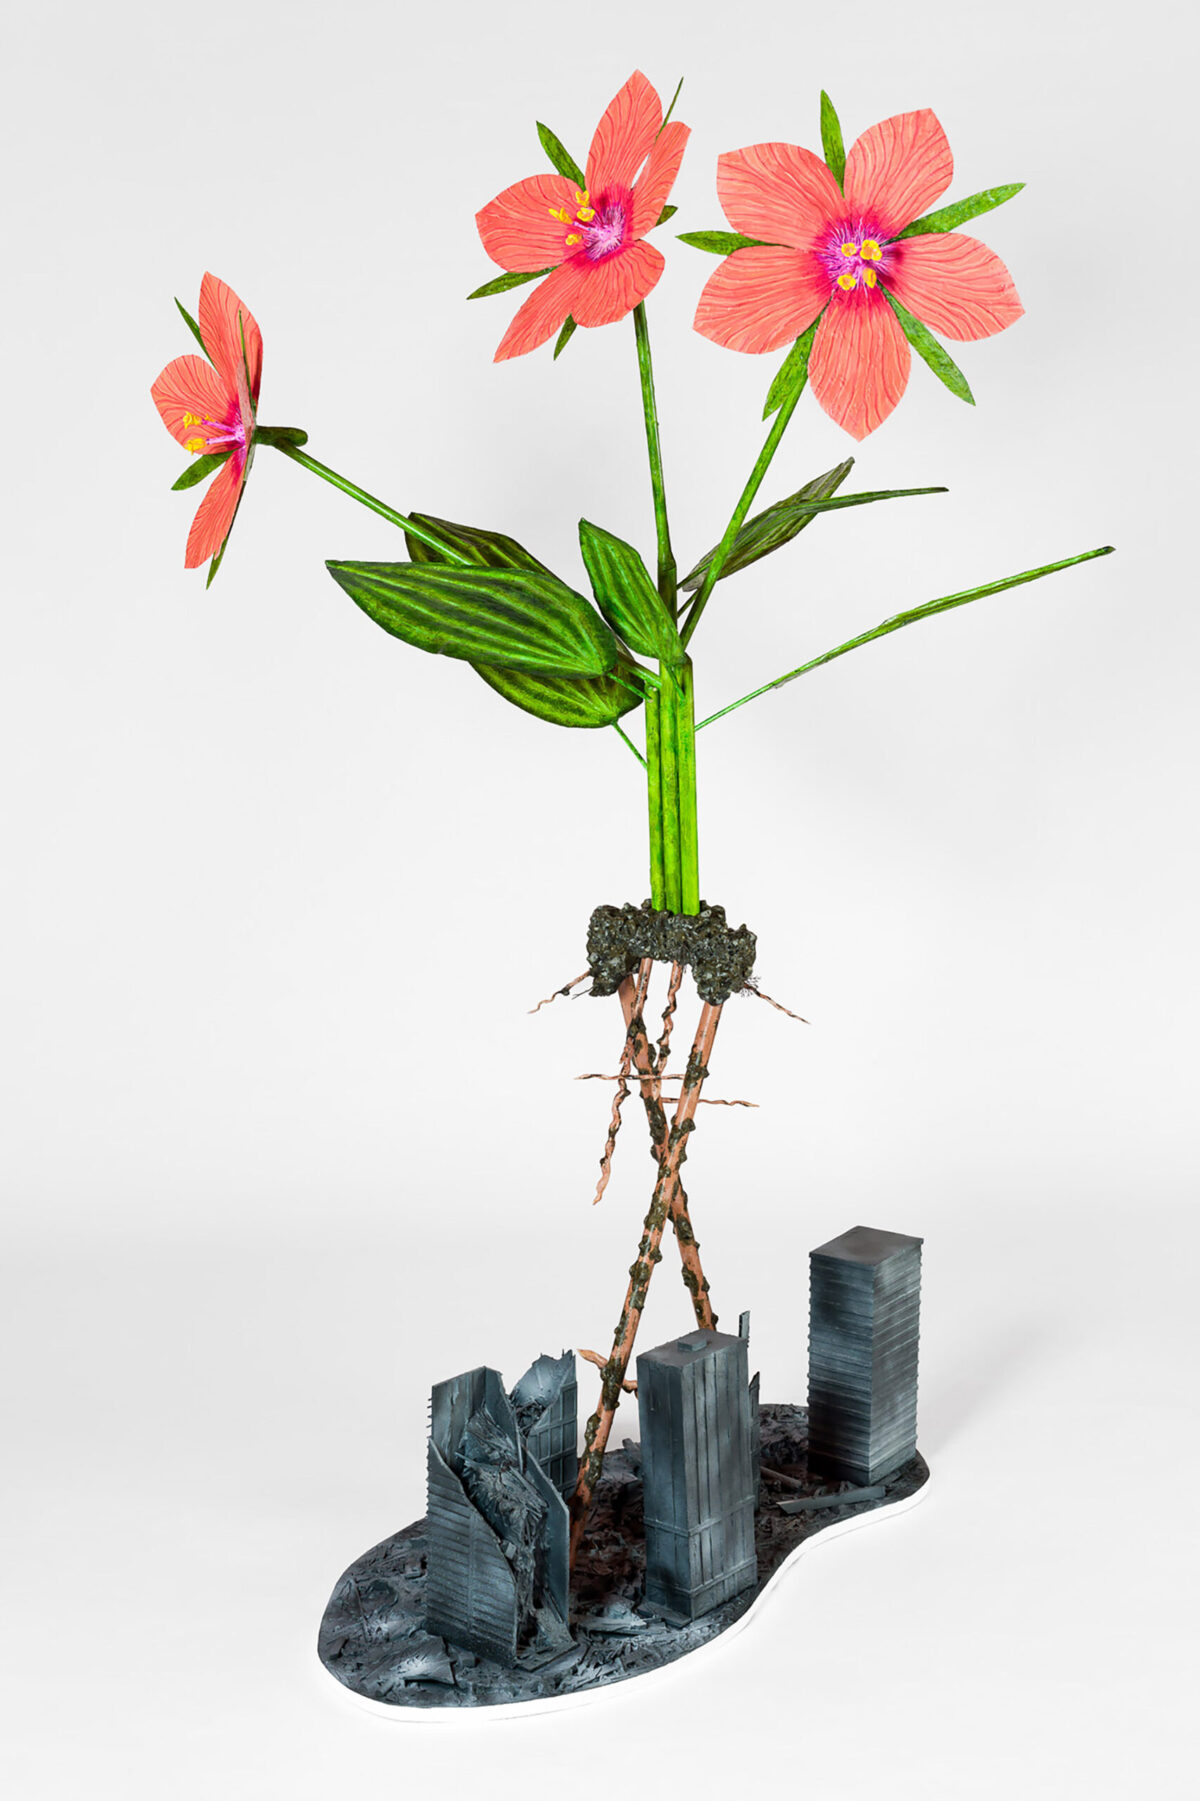 Jude Griebel | Next World Emissaries: Scarlet Pimpernel | 2021 | 110 x 65 x 51 in. | wood, paper-mache, acrylic | $19,850.